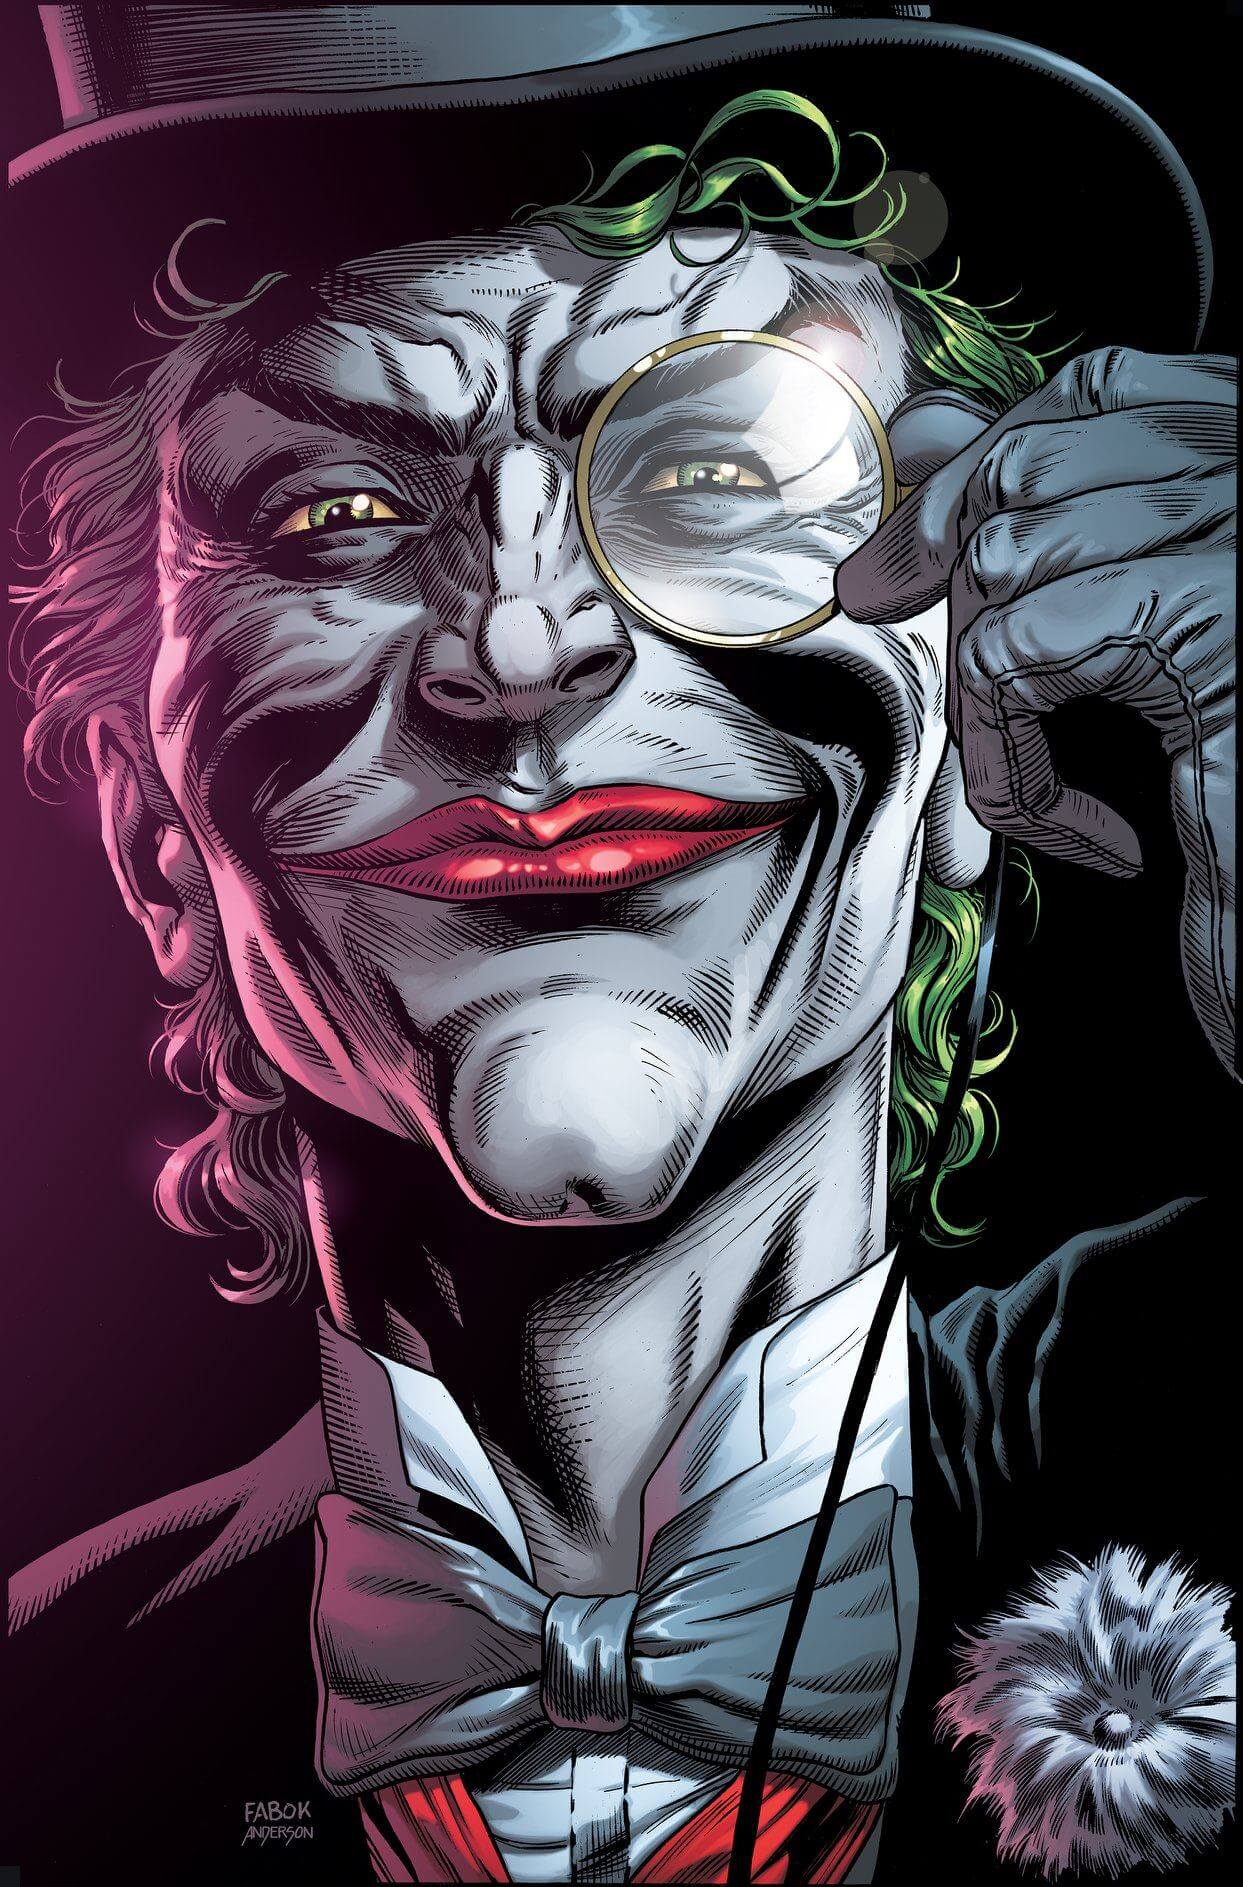 Batman Three Jokers #2 Premium E Jason Fabok Death In The Family Top Hat Variant Geoff Johns (09/29/2020) DC